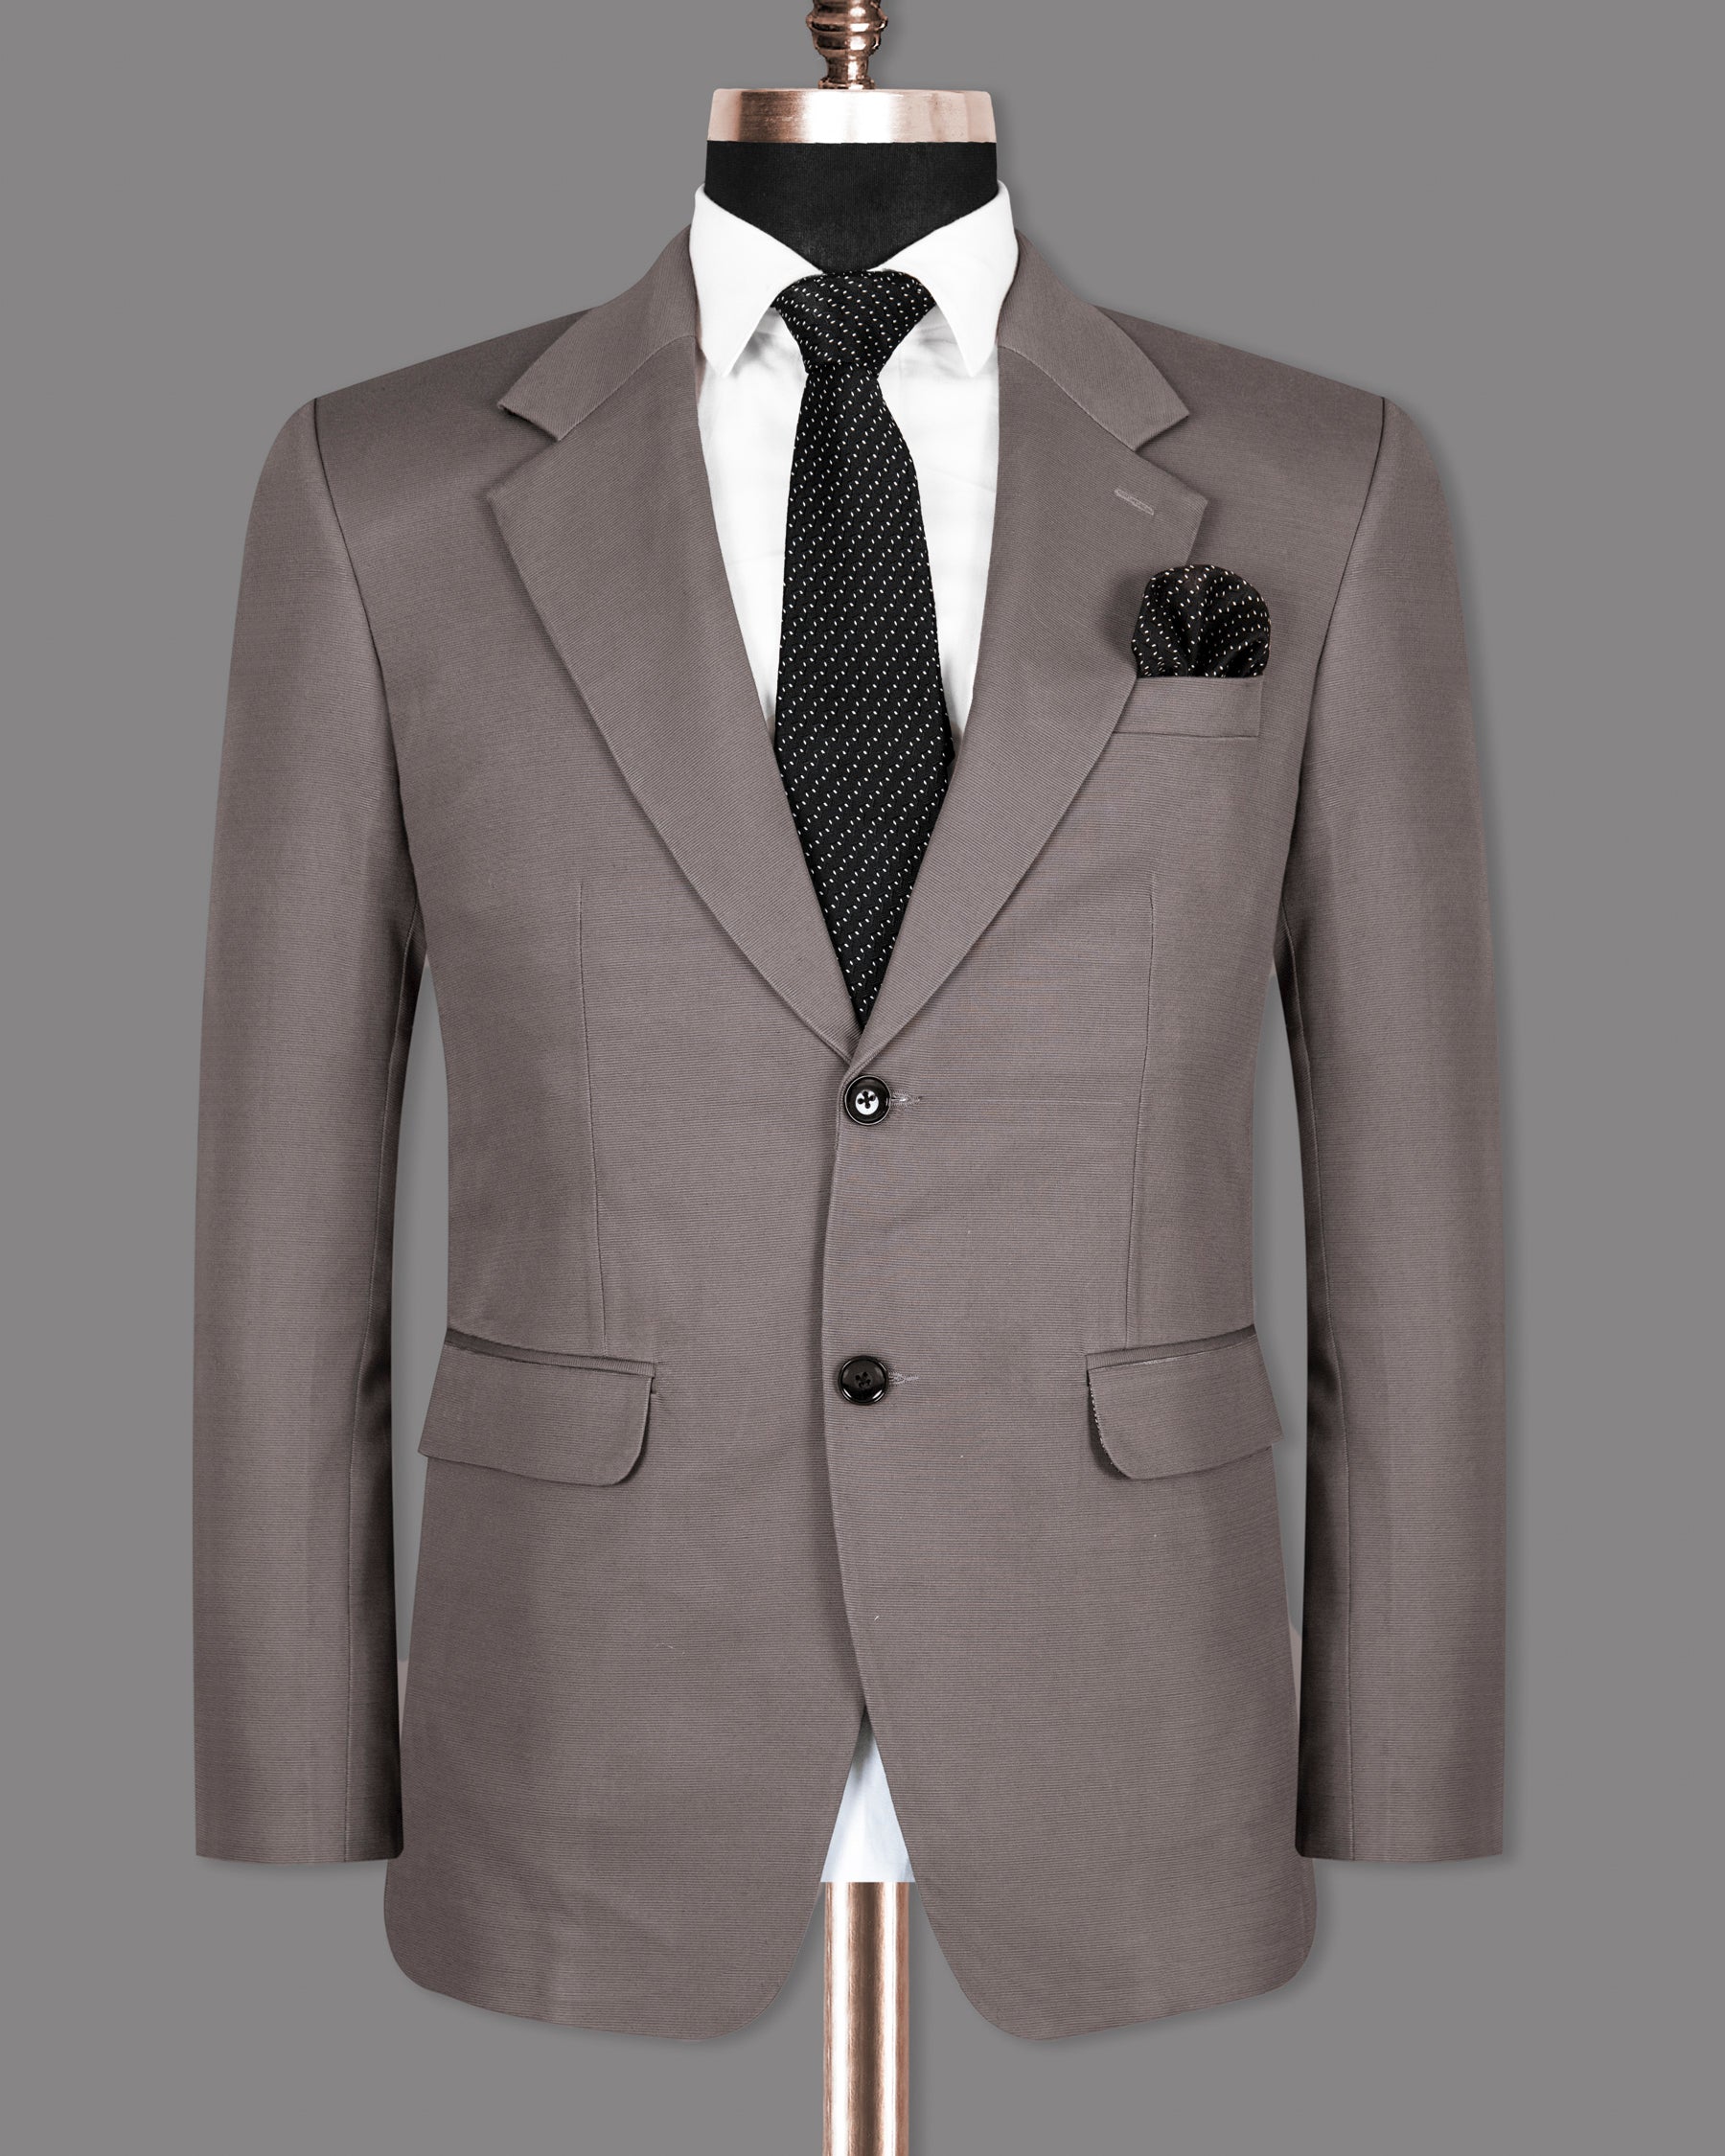 Friar Gray Premium Cotton Suit ST1279-SB-36, ST1279-SB-38, ST1279-SB-40, ST1279-SB-42, ST1279-SB-44, ST1279-SB-46, ST1279-SB-54, ST1279-SB-48, ST1279-SB-50, ST1279-SB-56, ST1279-SB-58, ST1279-SB-60, ST1279-SB-52